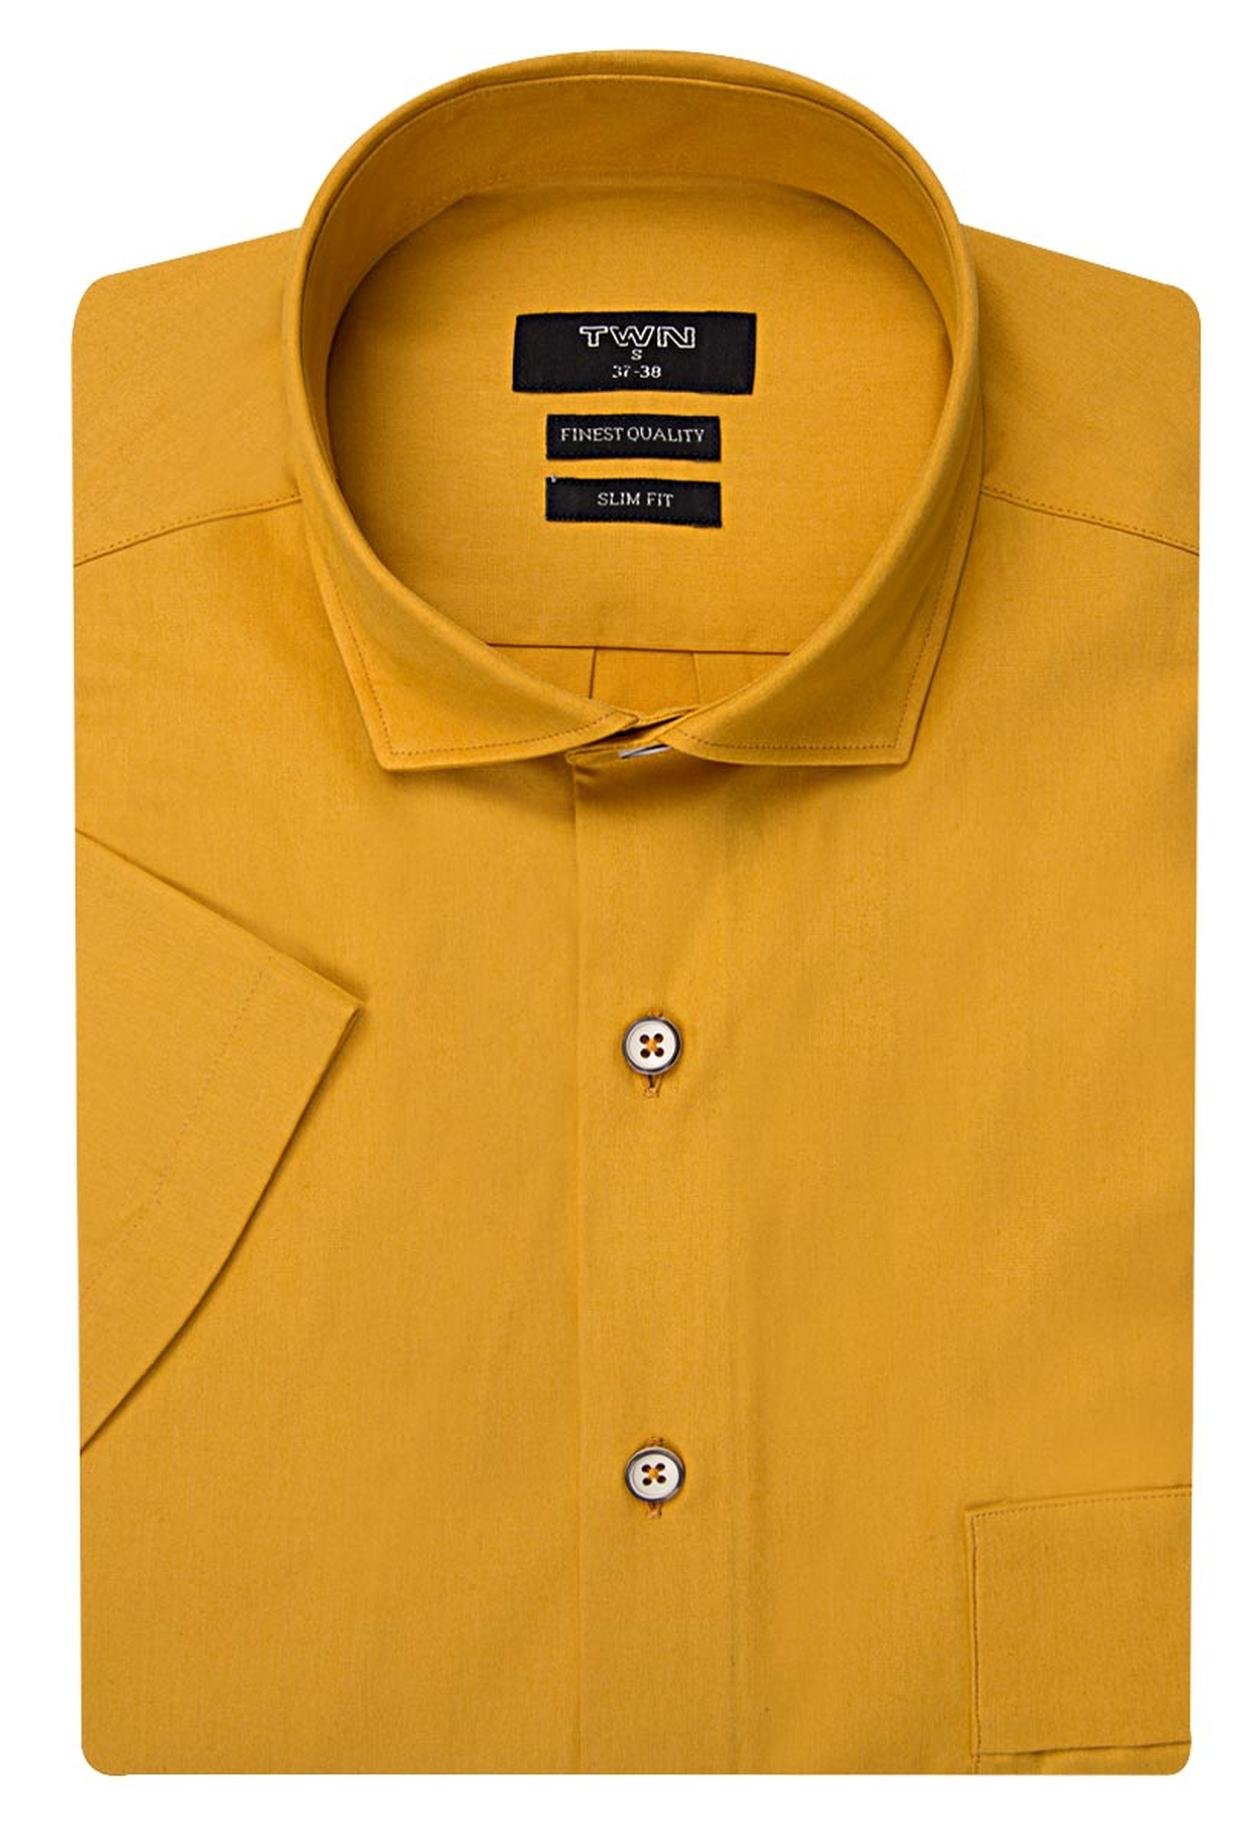 Twn Slim Fit Sarı Gömlek